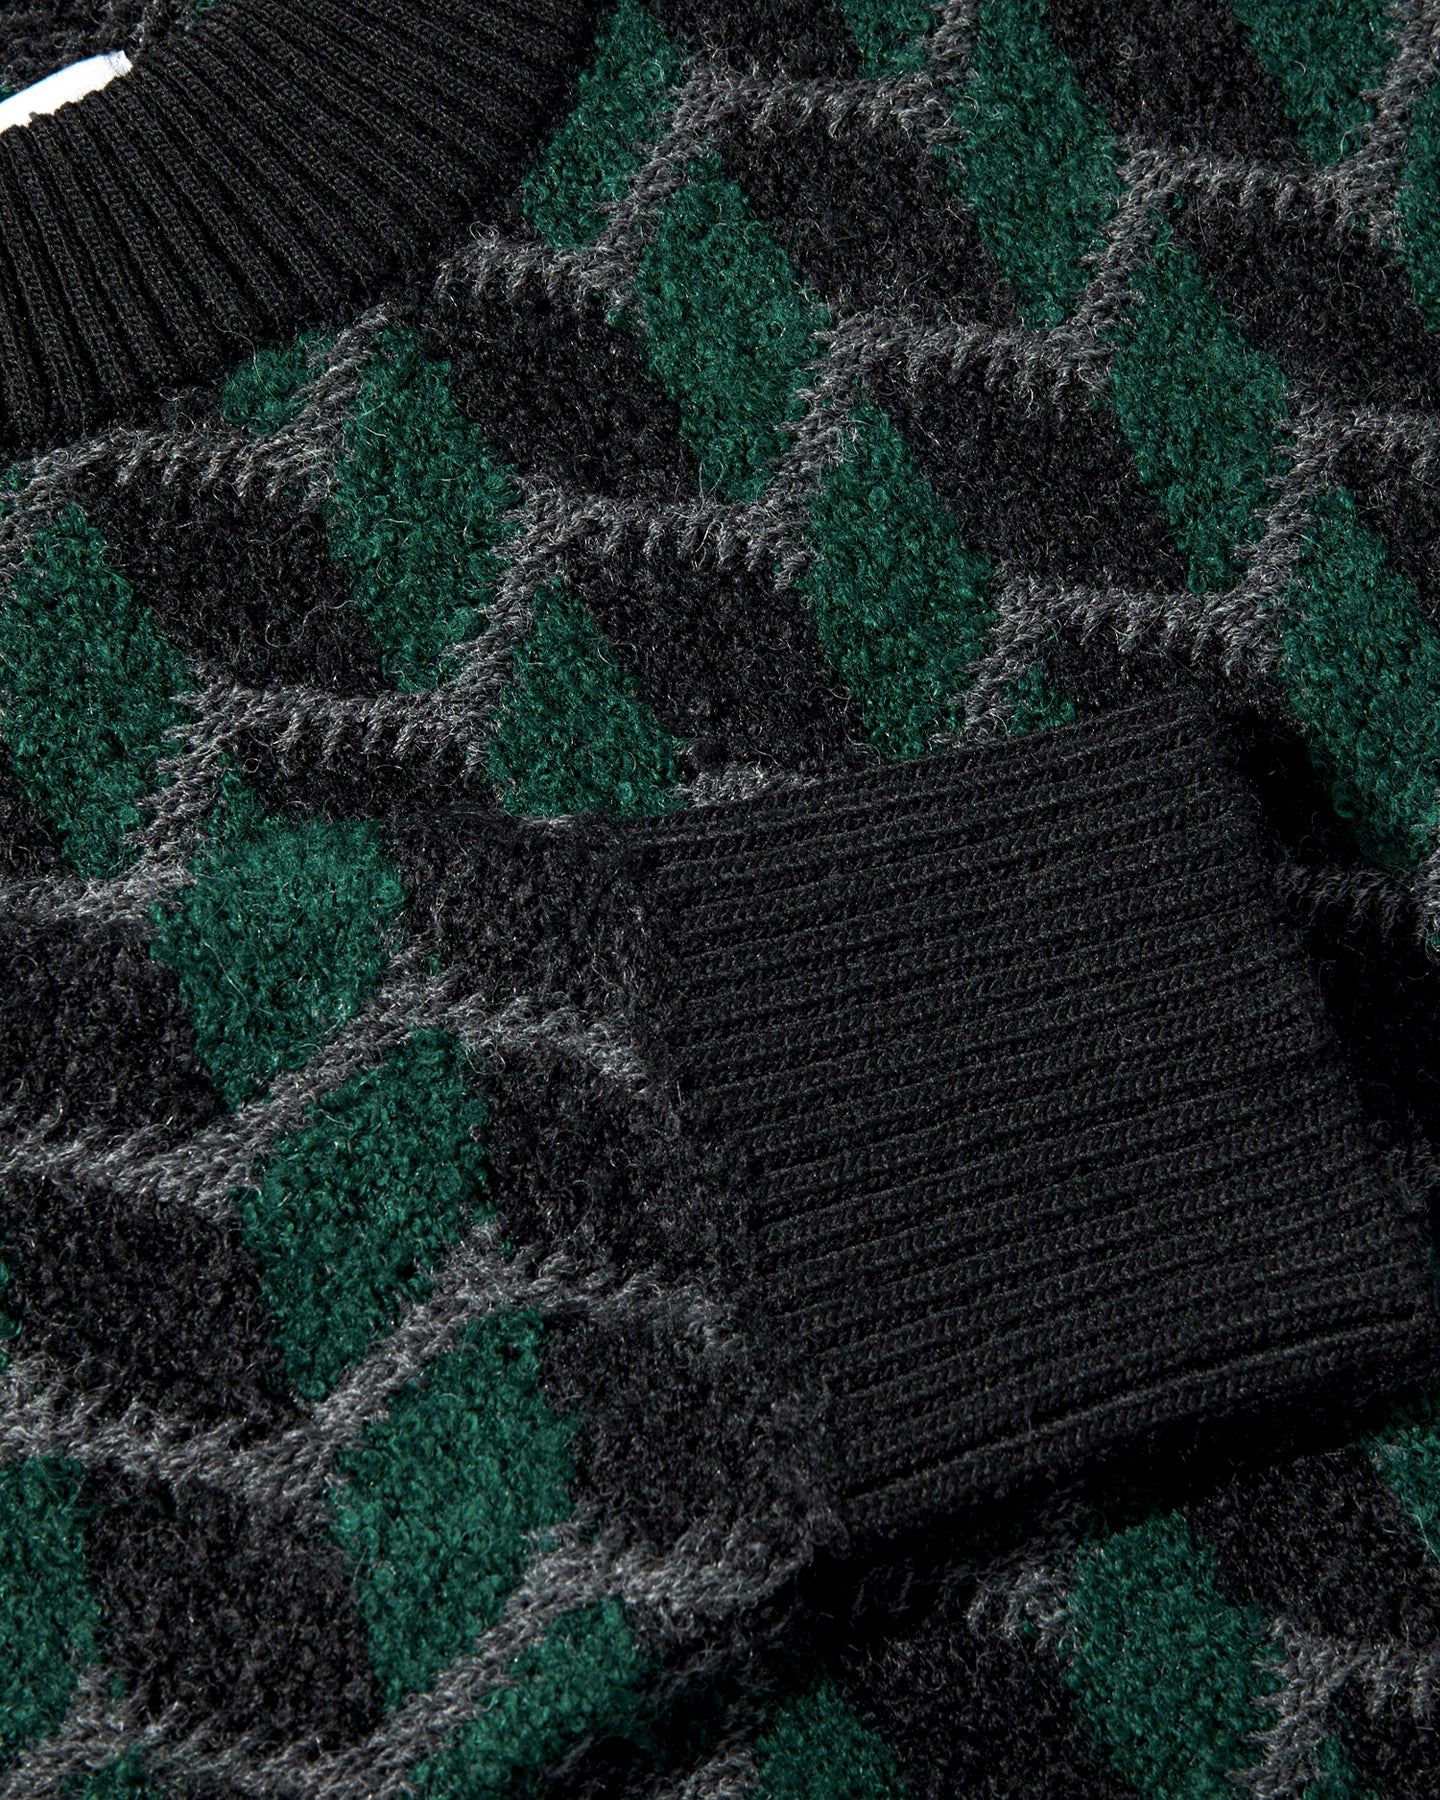 Polar Zig Zag Knit Sweater - Black / Dark Teal